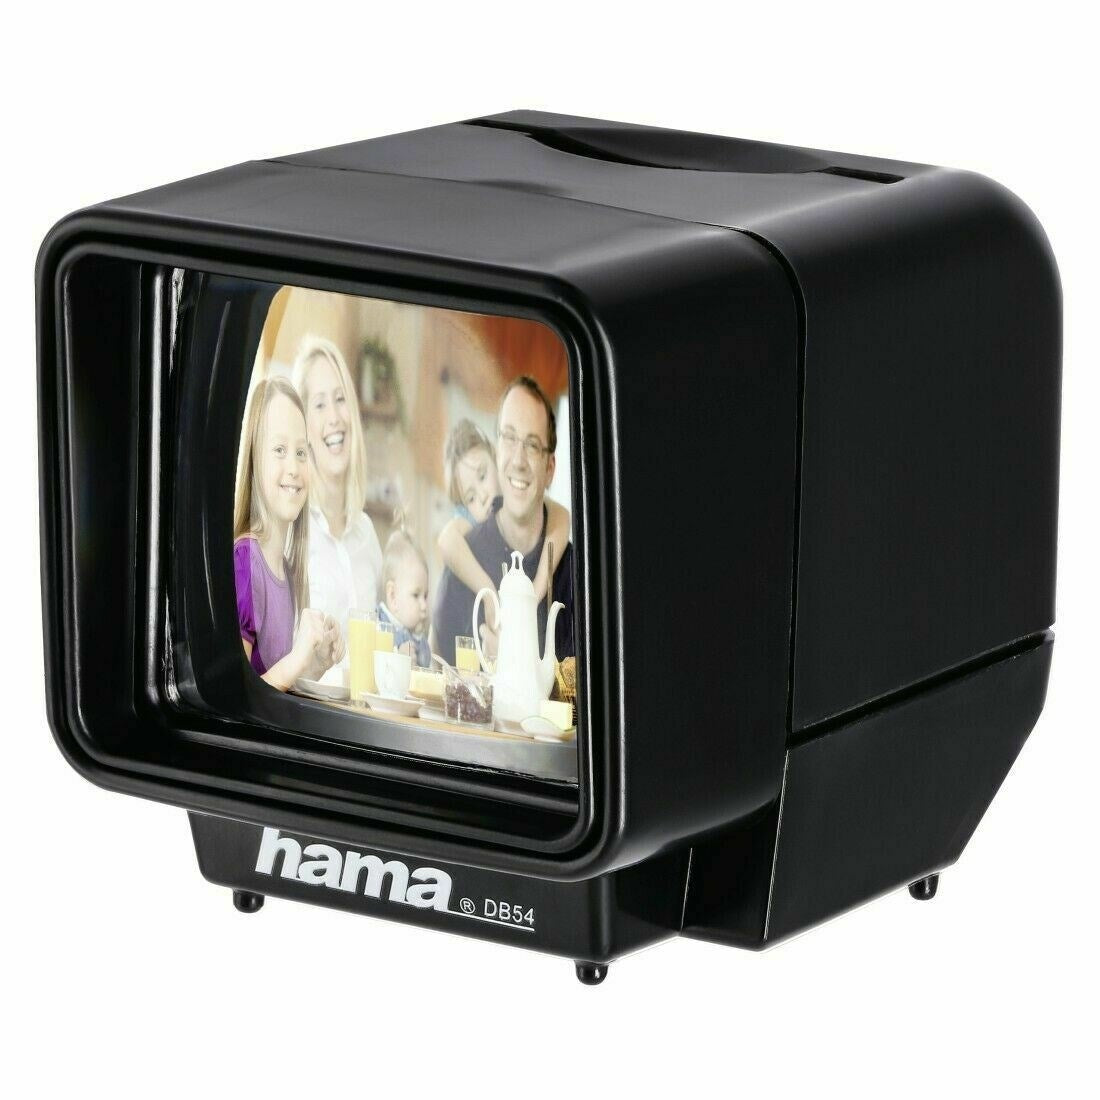 Product Image of Hama Slide Viewer LED 35mm Slides 3x Magnification Battery Powered Illumination